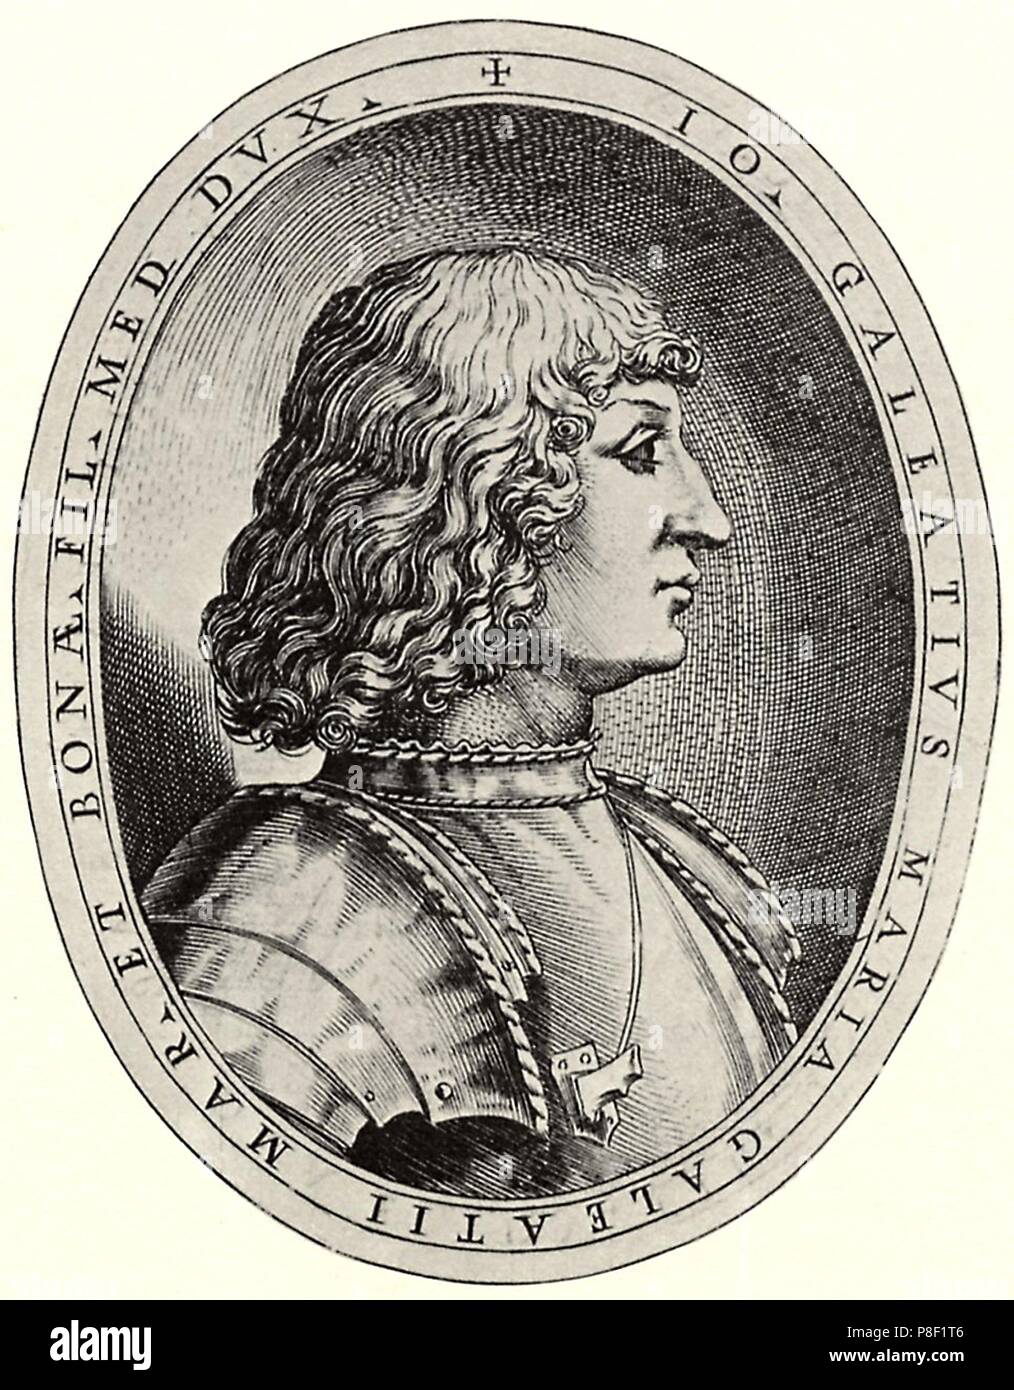 Portrait of Gian Galeazzo Sforza, Duke of Milan. Illustration for 'Cremona fedelissima'. Museum: PRIVATE COLLECTION. Stock Photo